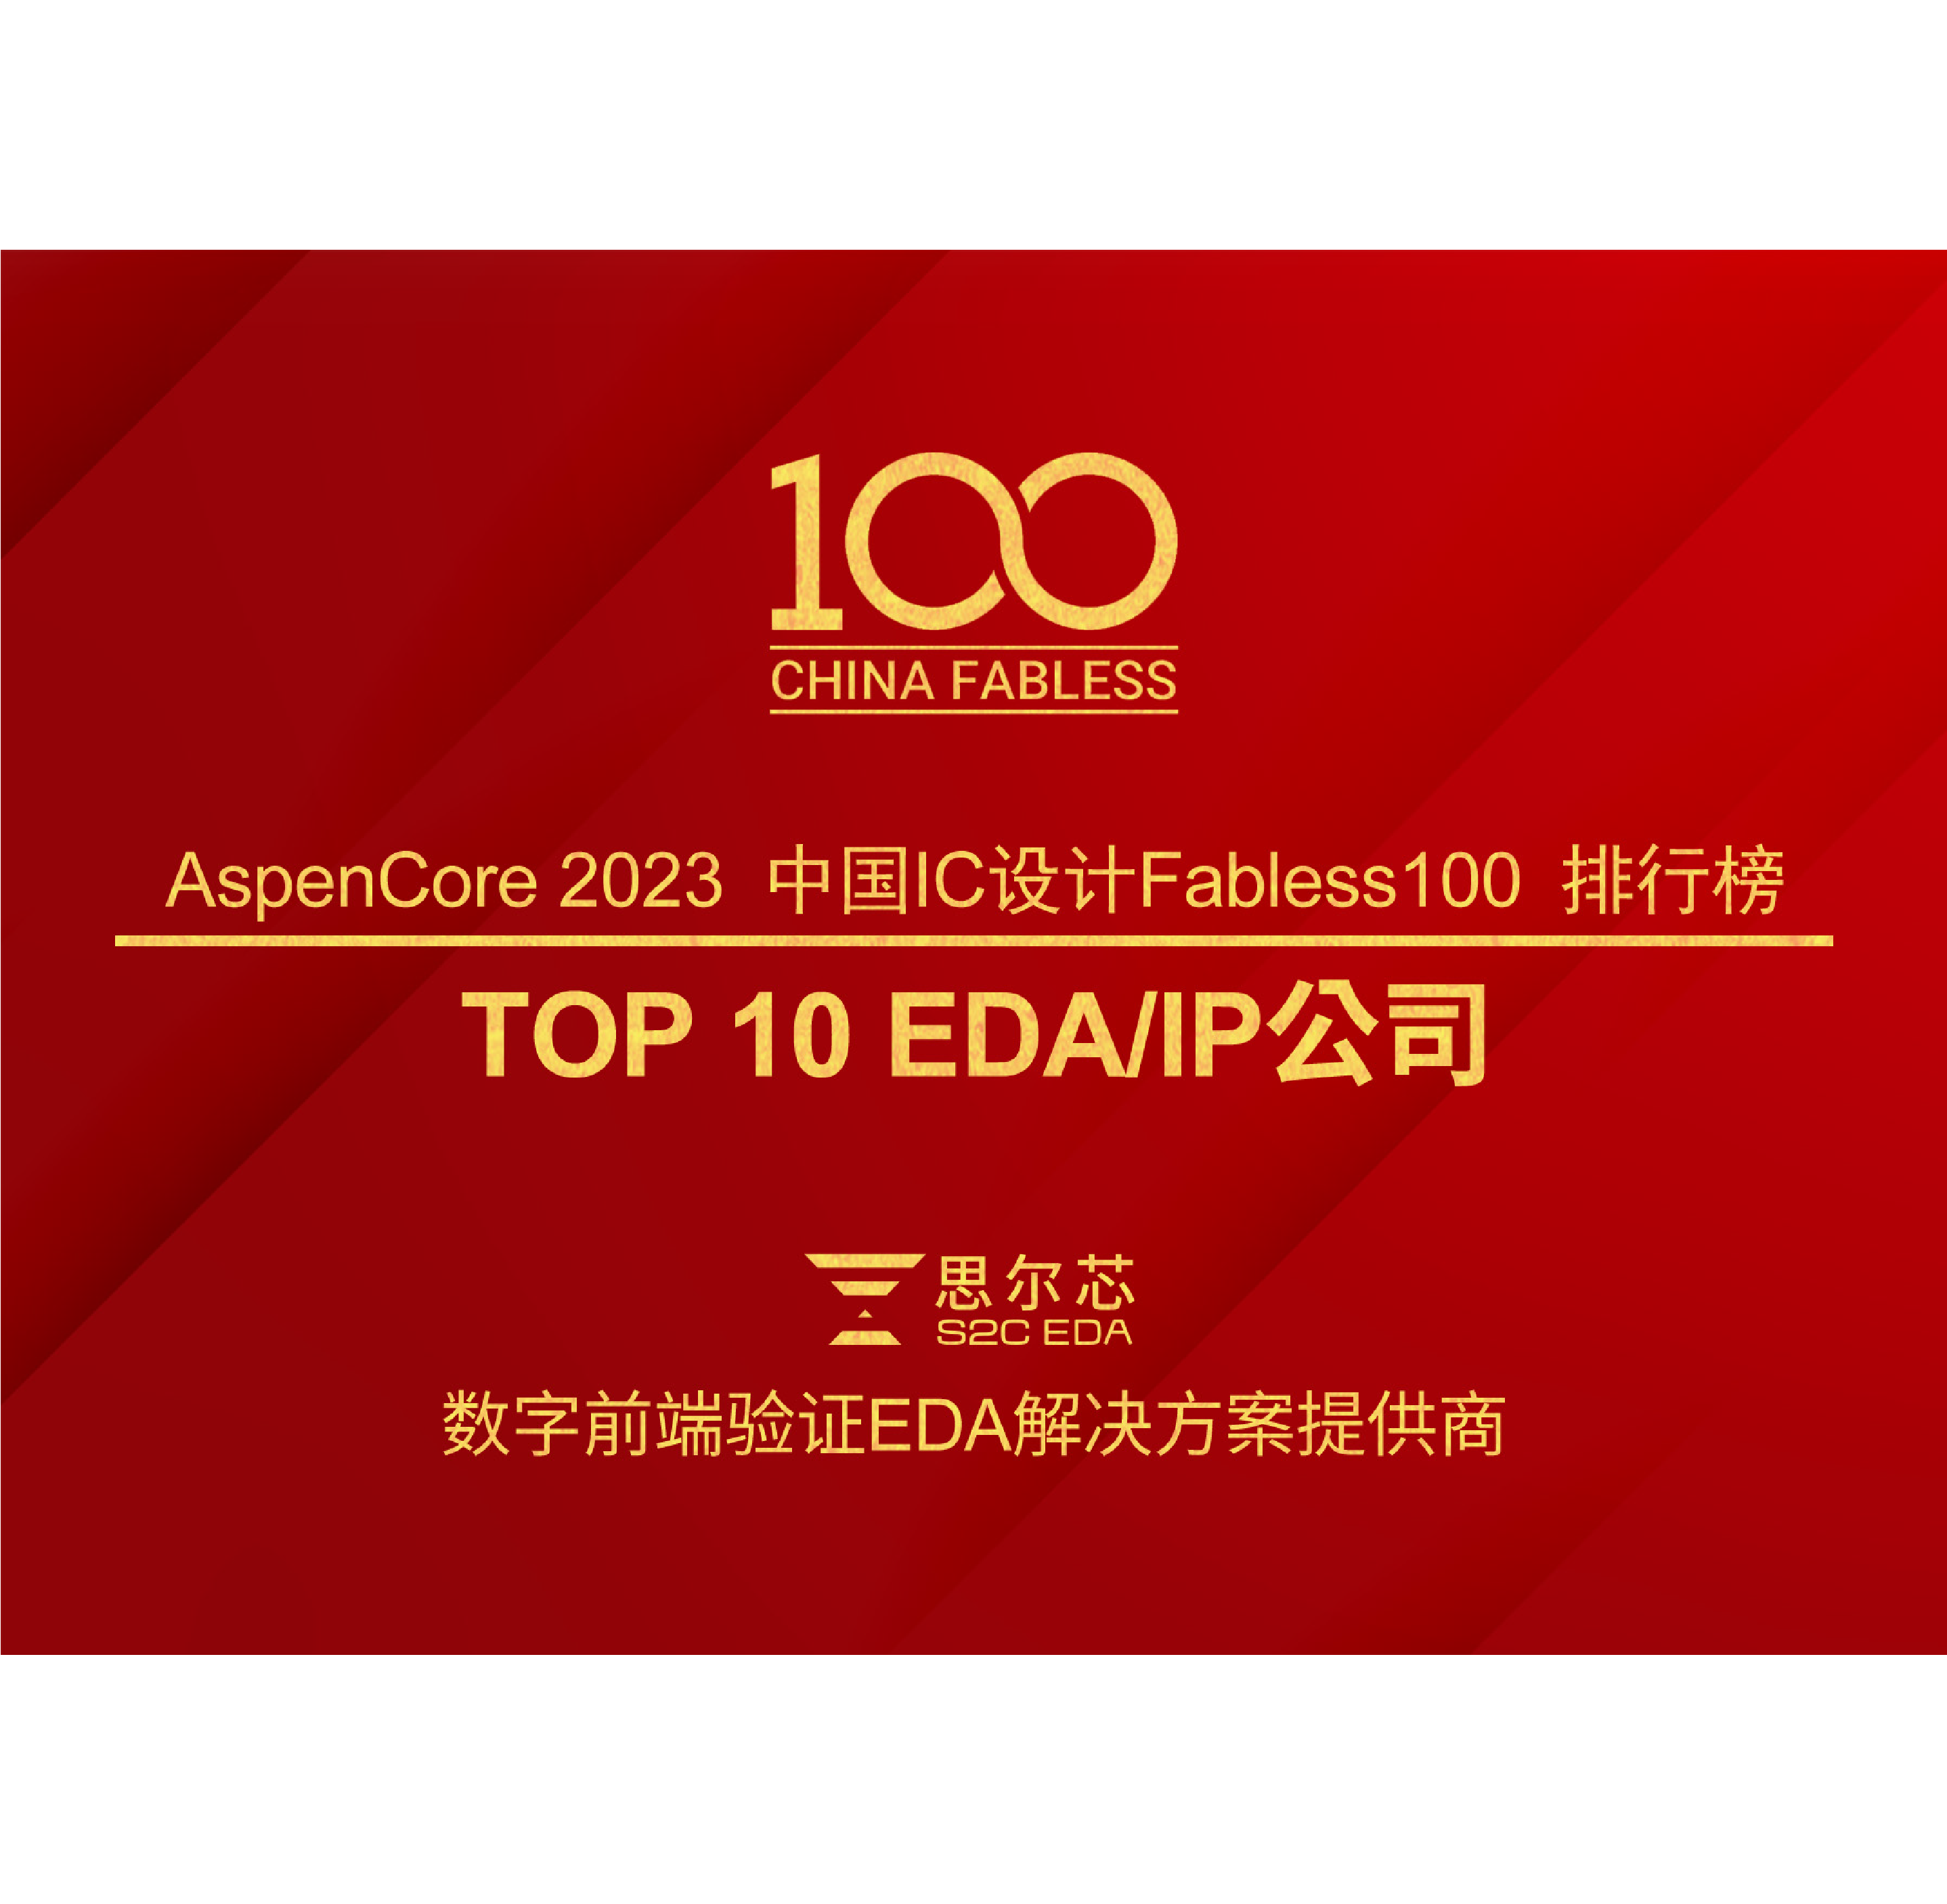  2023 Top10 EDA/IP公司